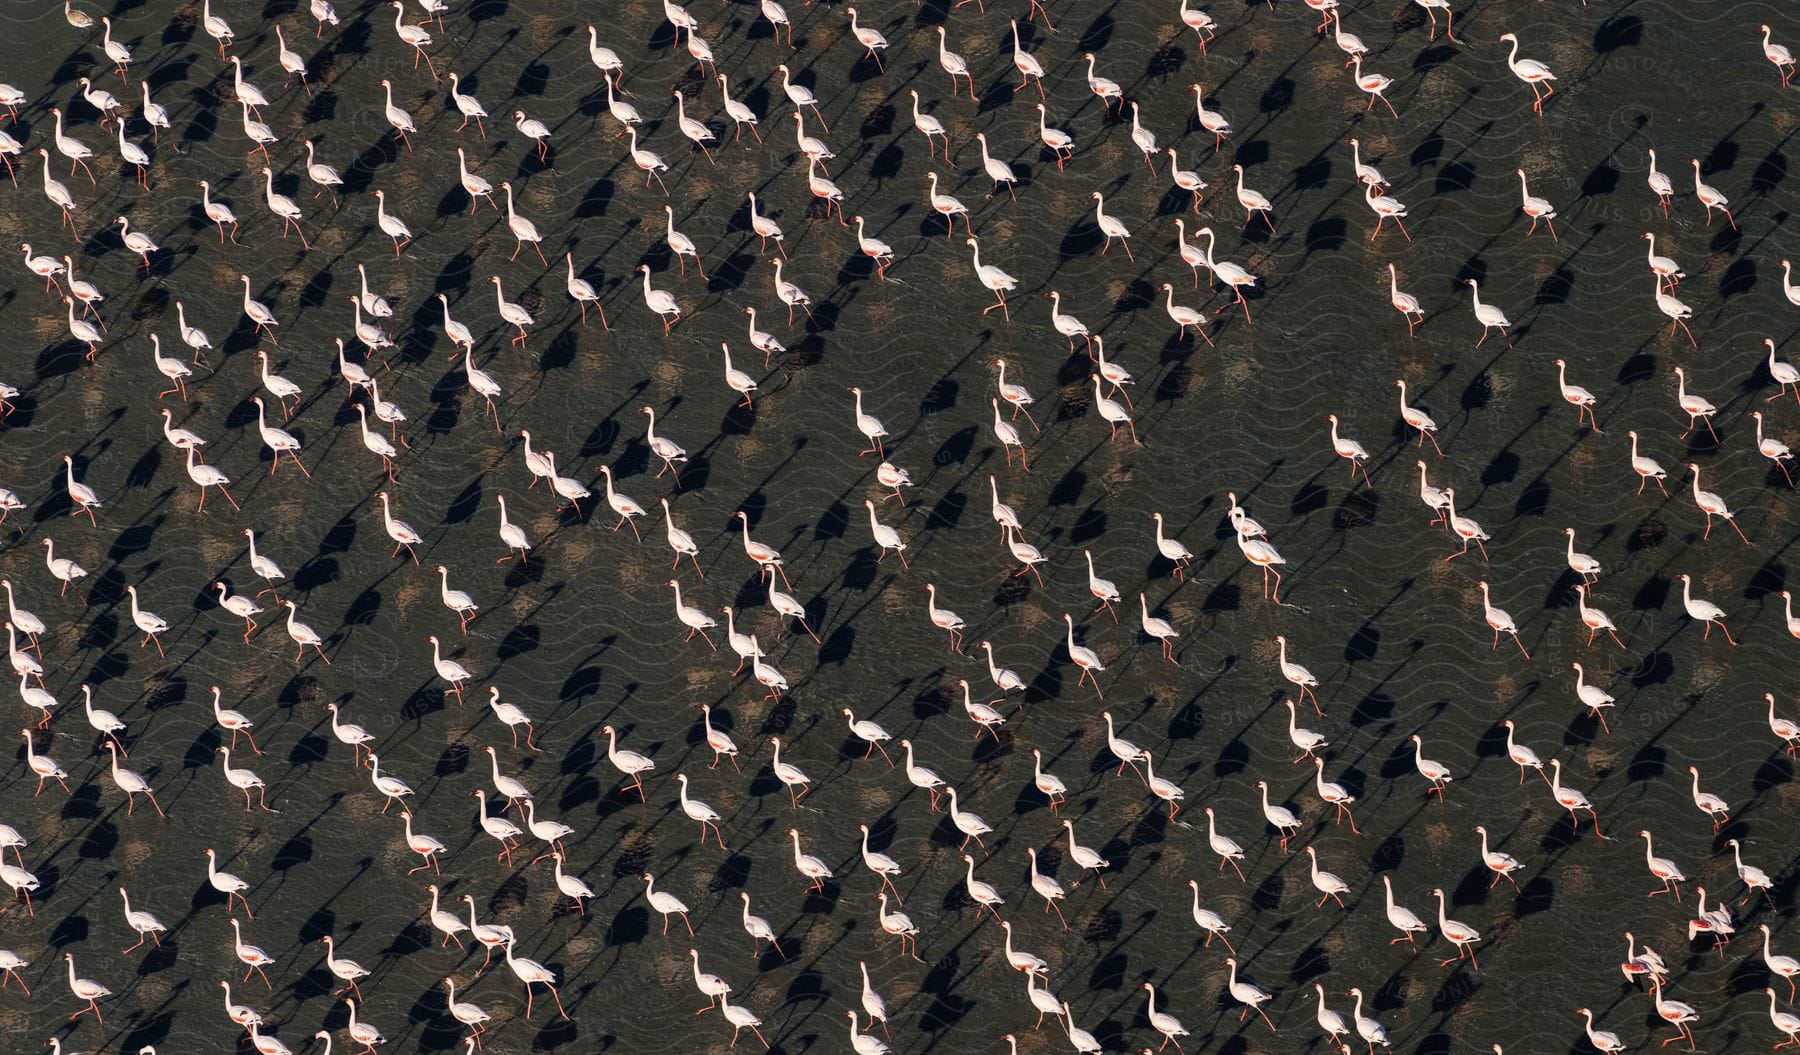 An aerial clip of flocks of birds on the soil